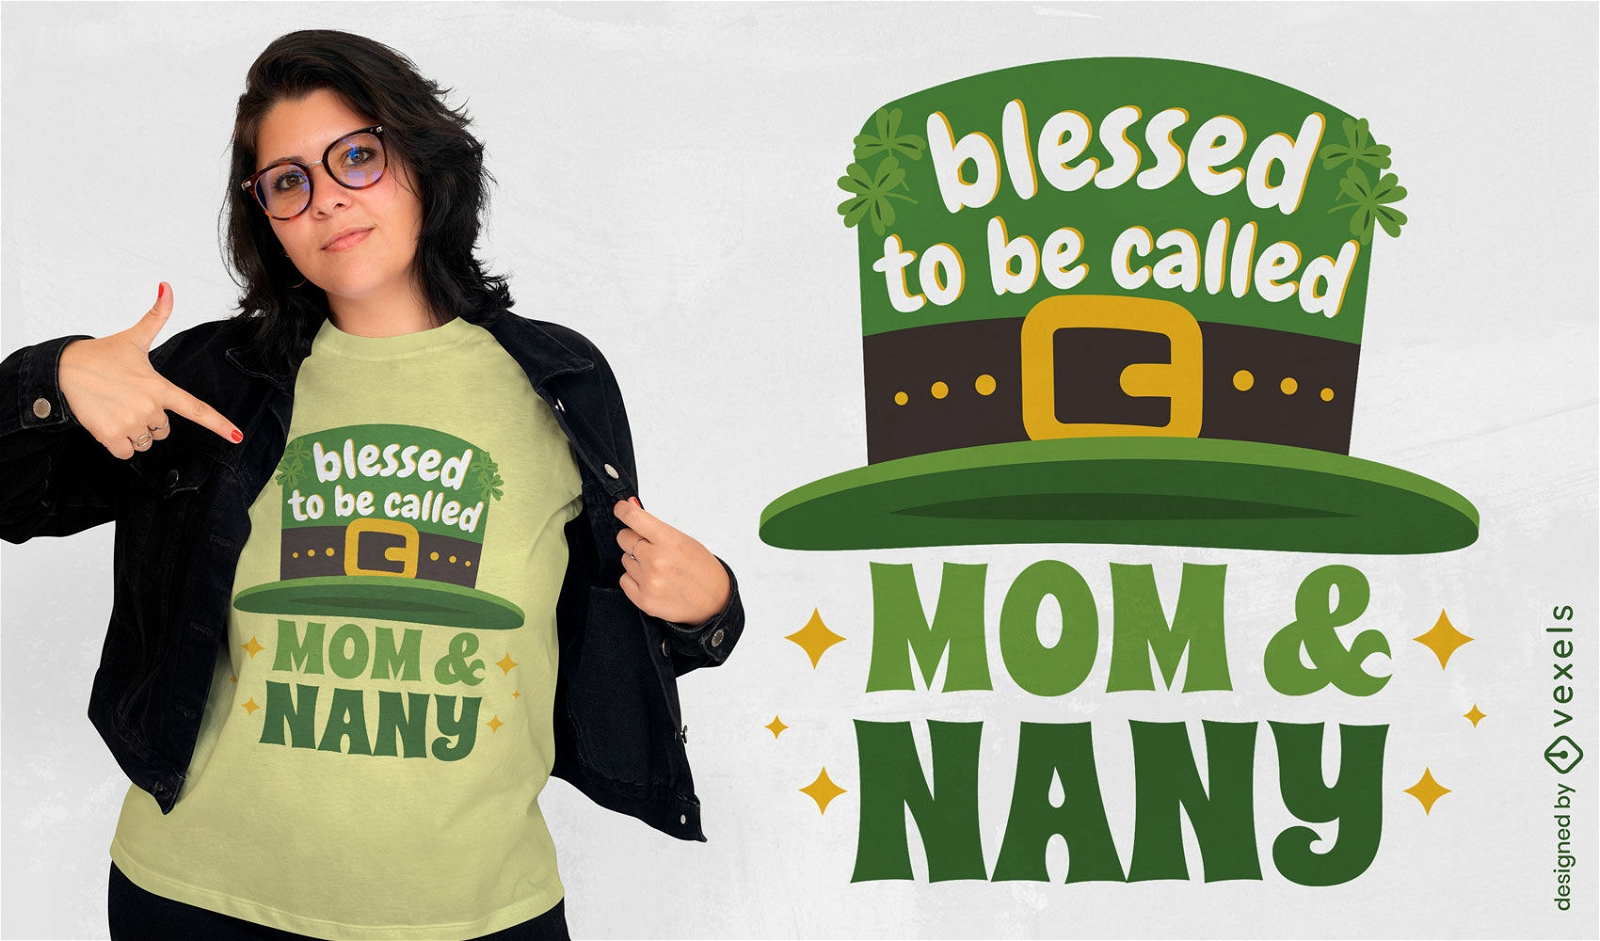 Nanny St Patrick's day t-shirt design